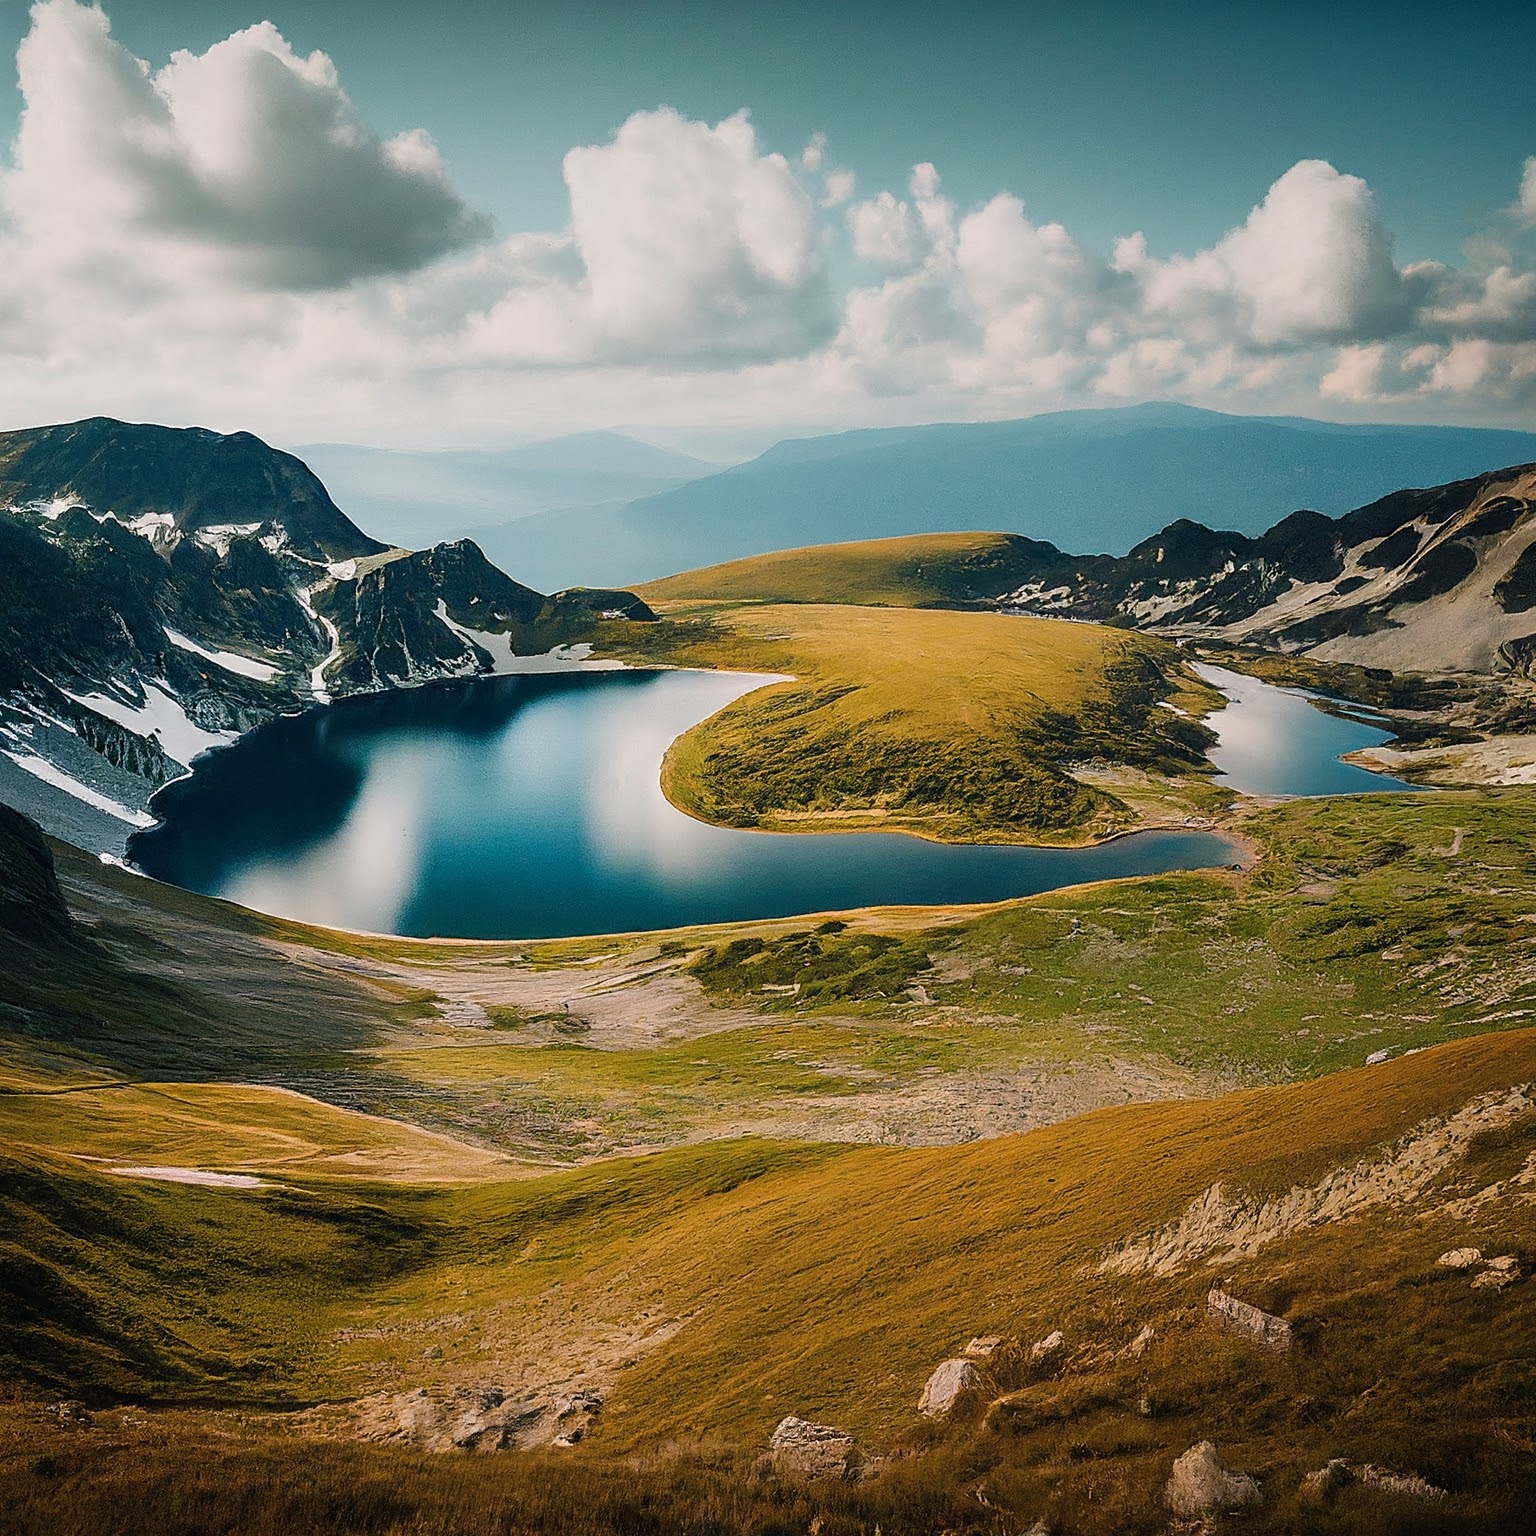 The Seven Rila Lakes in Bulgaria, a chain of alpine lakes in the Rila Mountains.